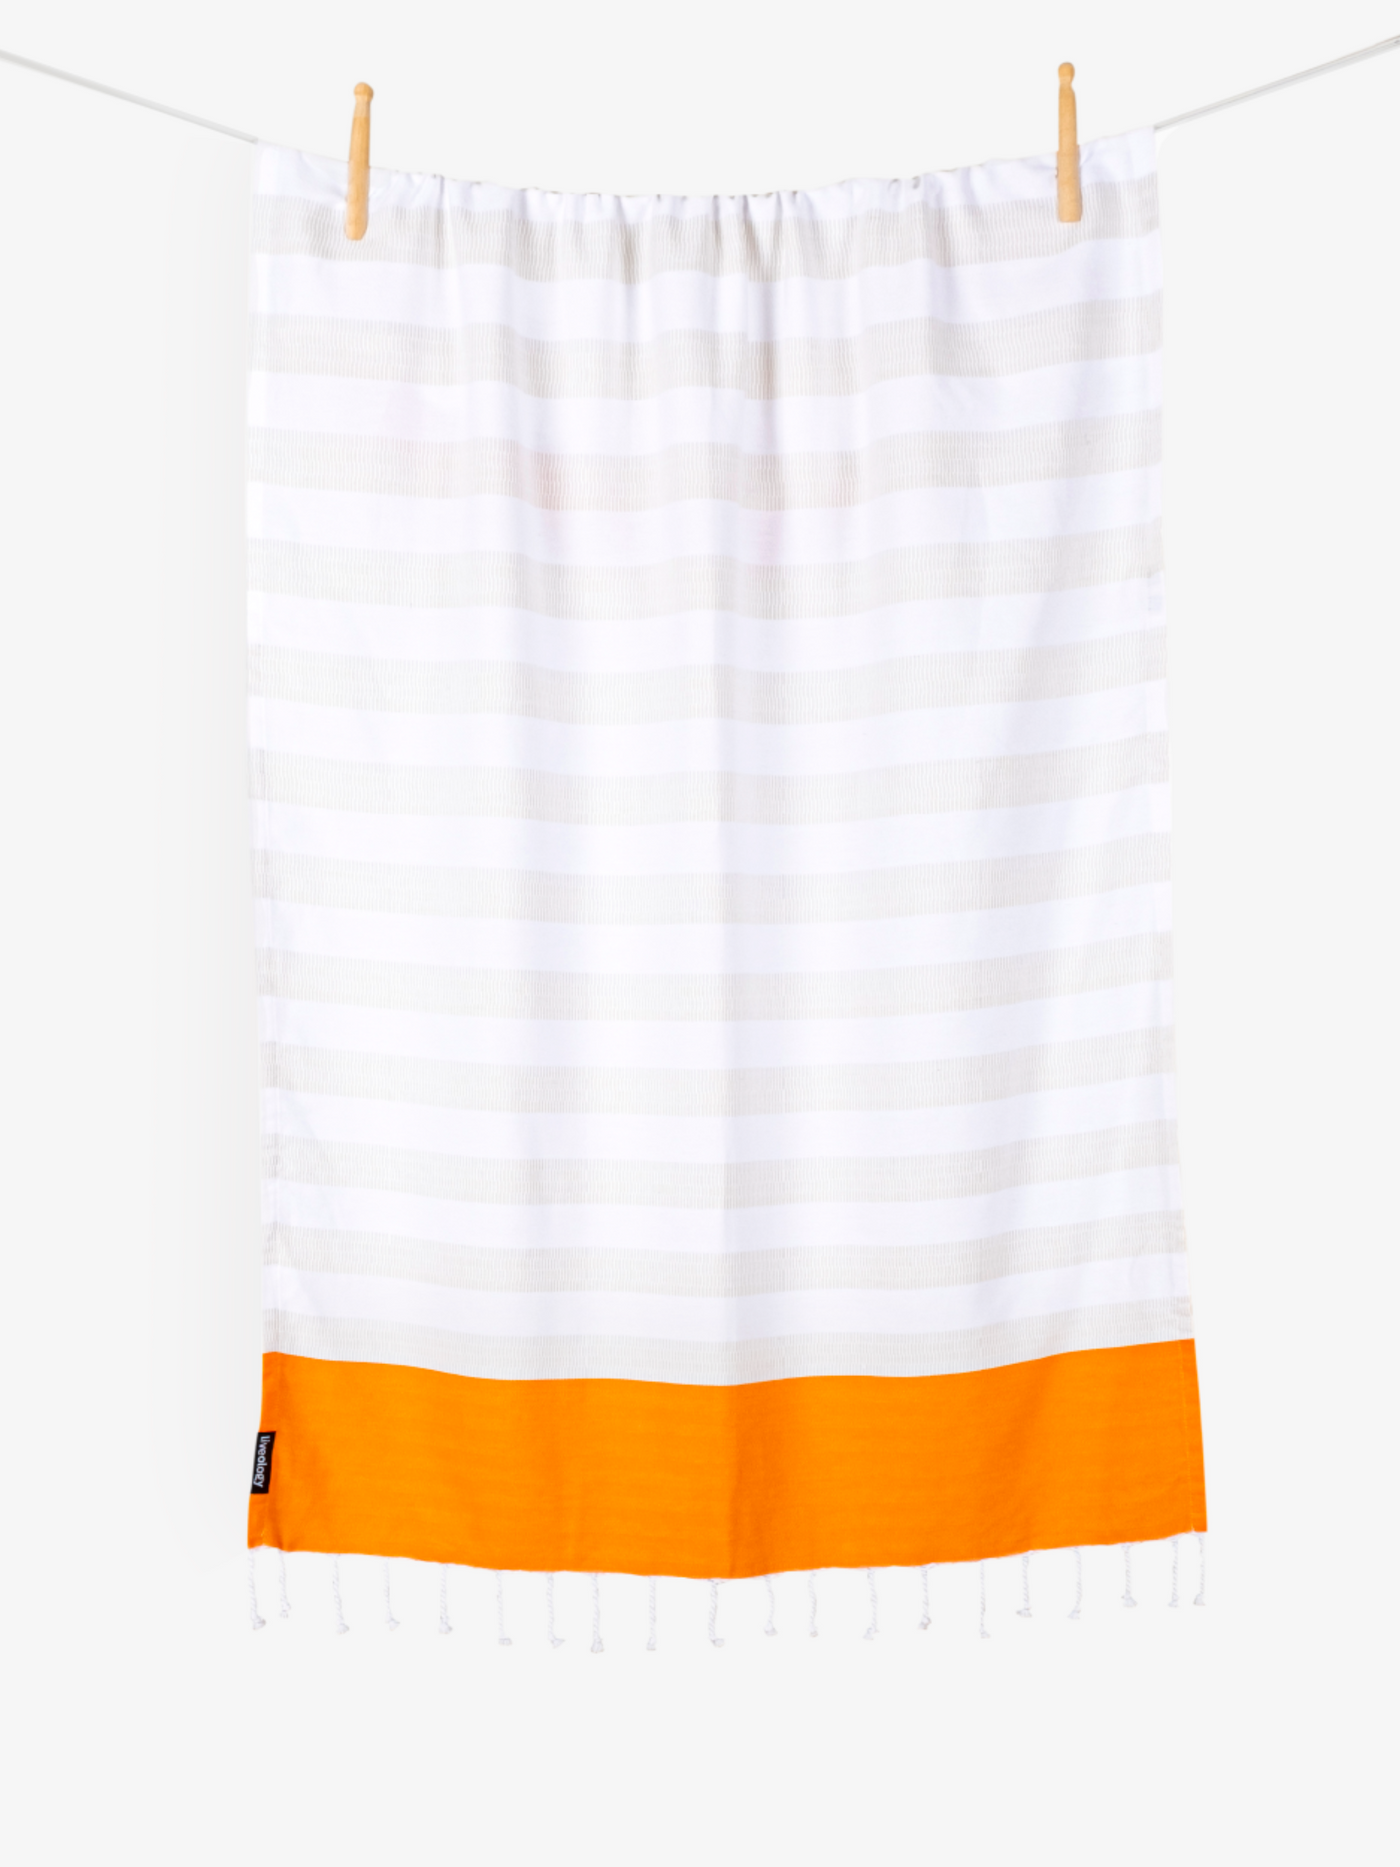 Tangerine Woven Beach Towel